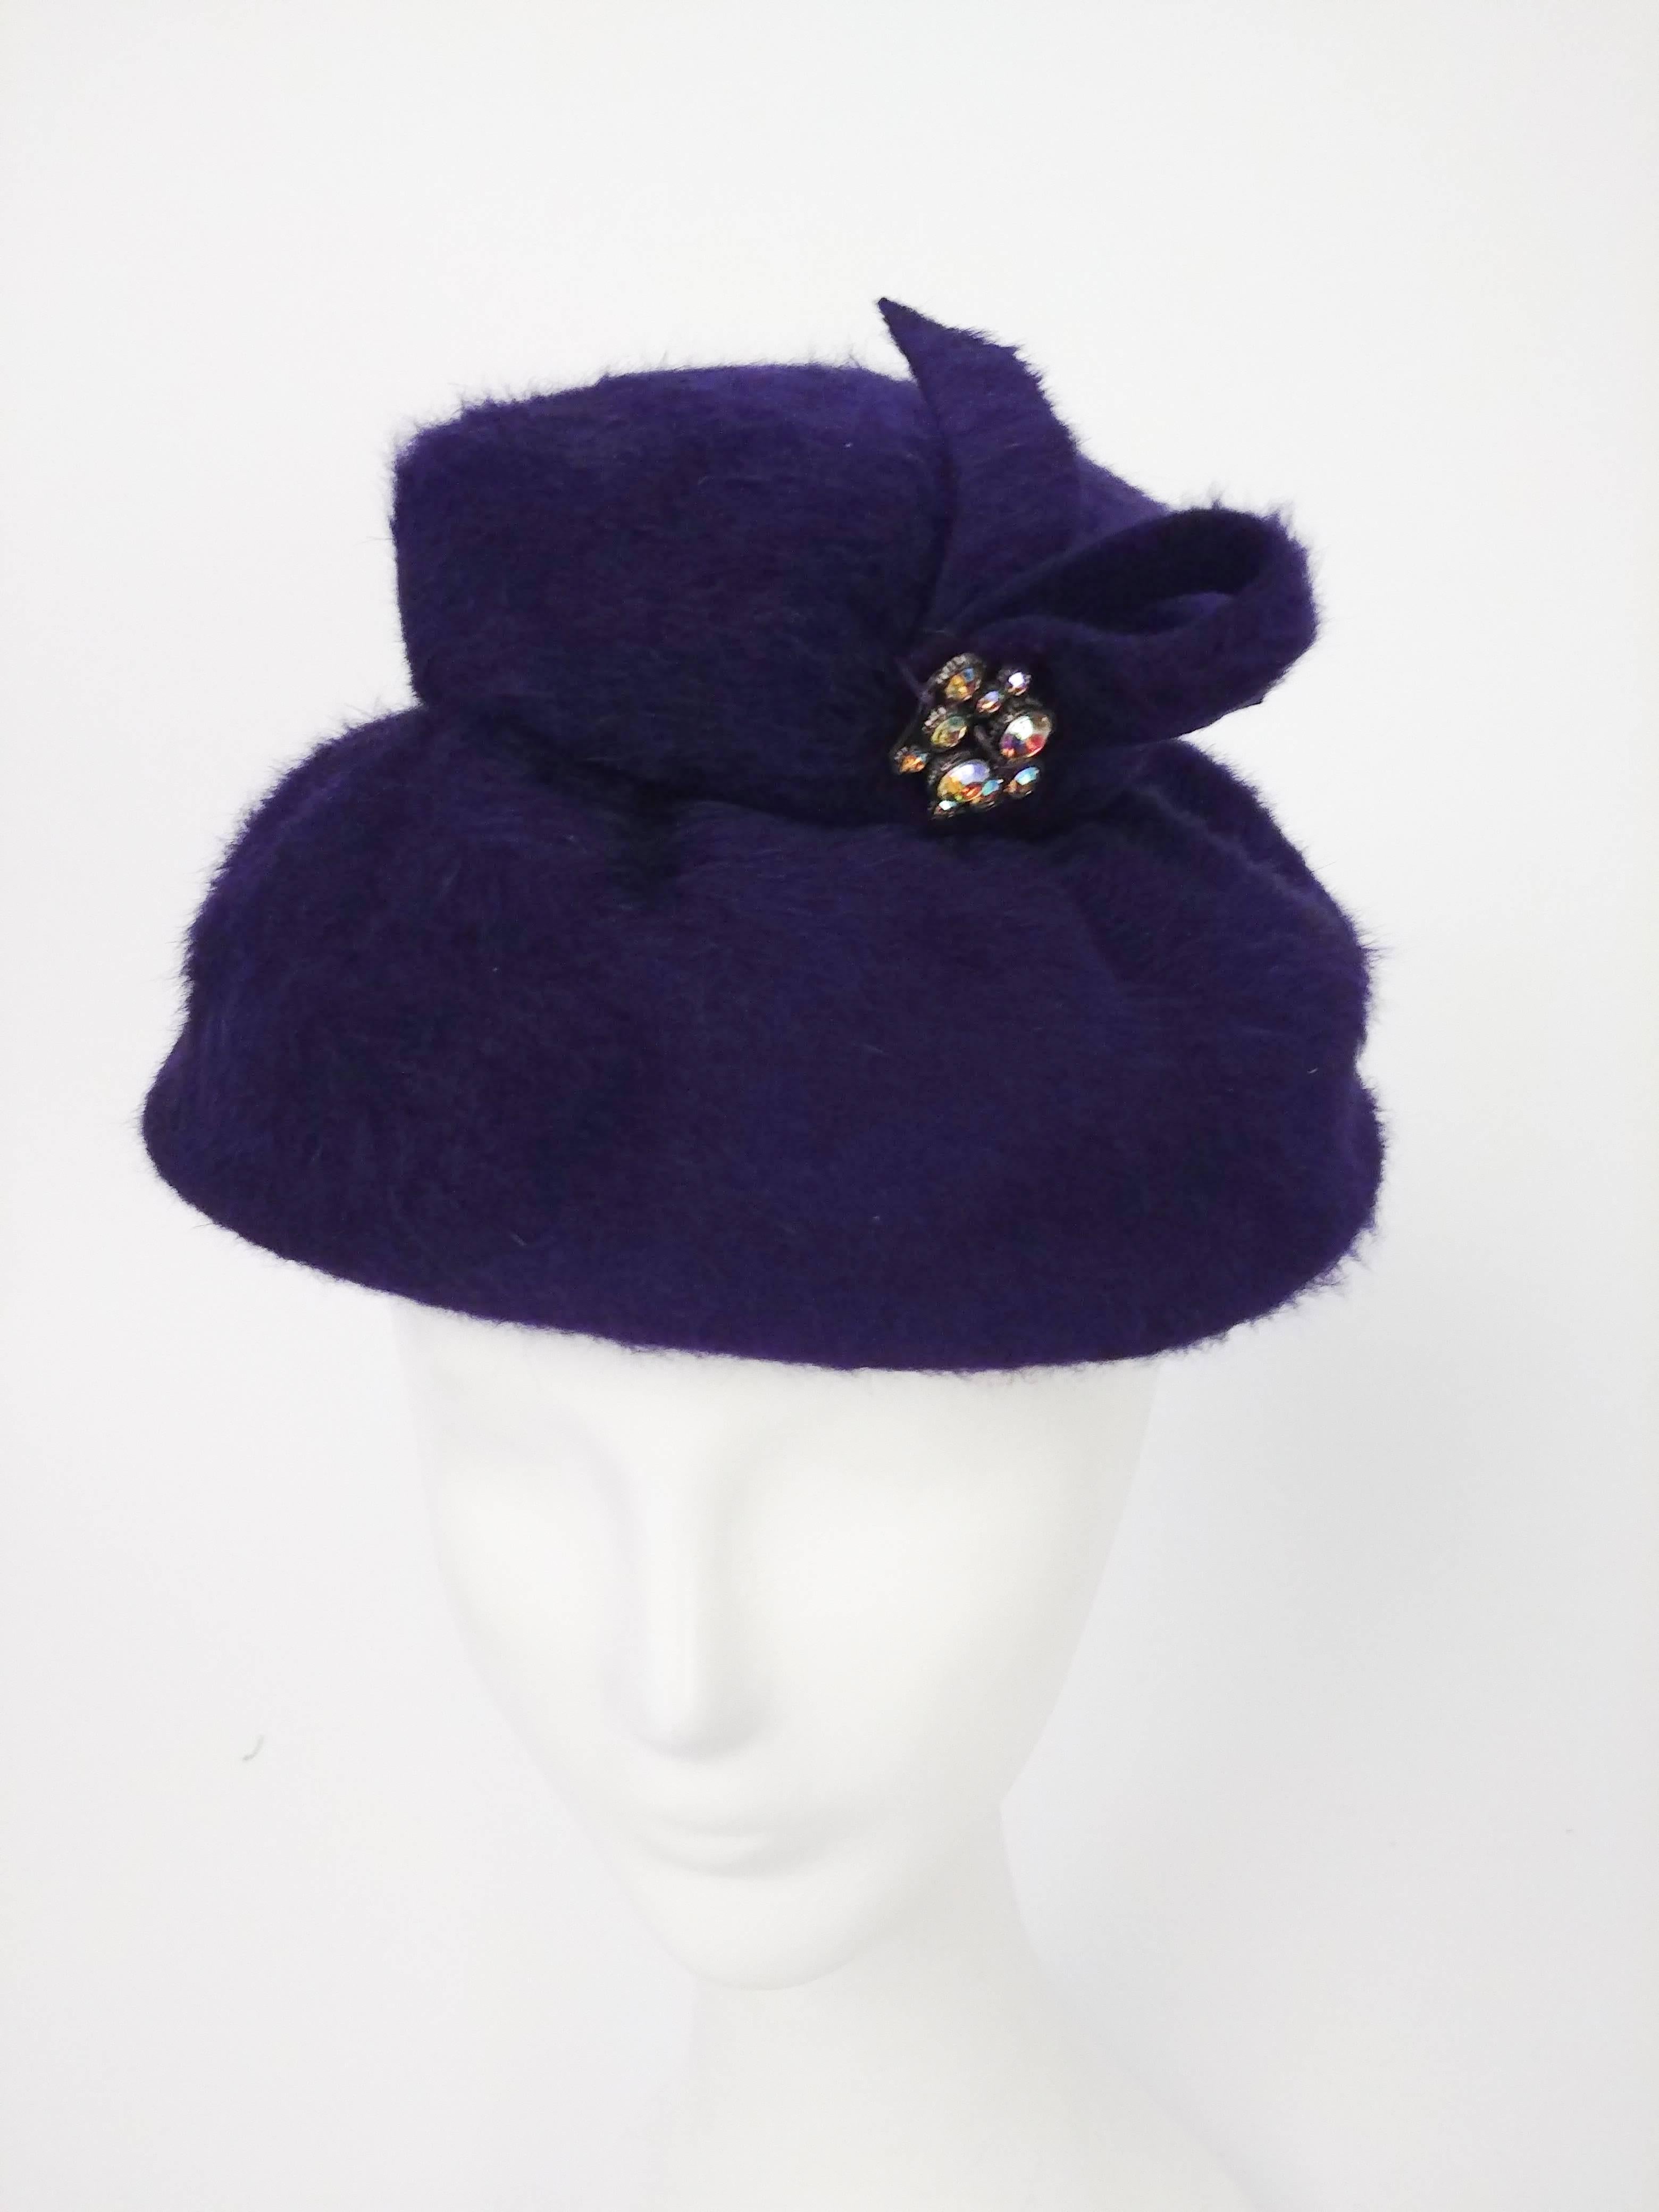 1960s Purple Felt Hat w/ Rhinestone Pin. Wool felt purple hat with unique sculpted shape. 